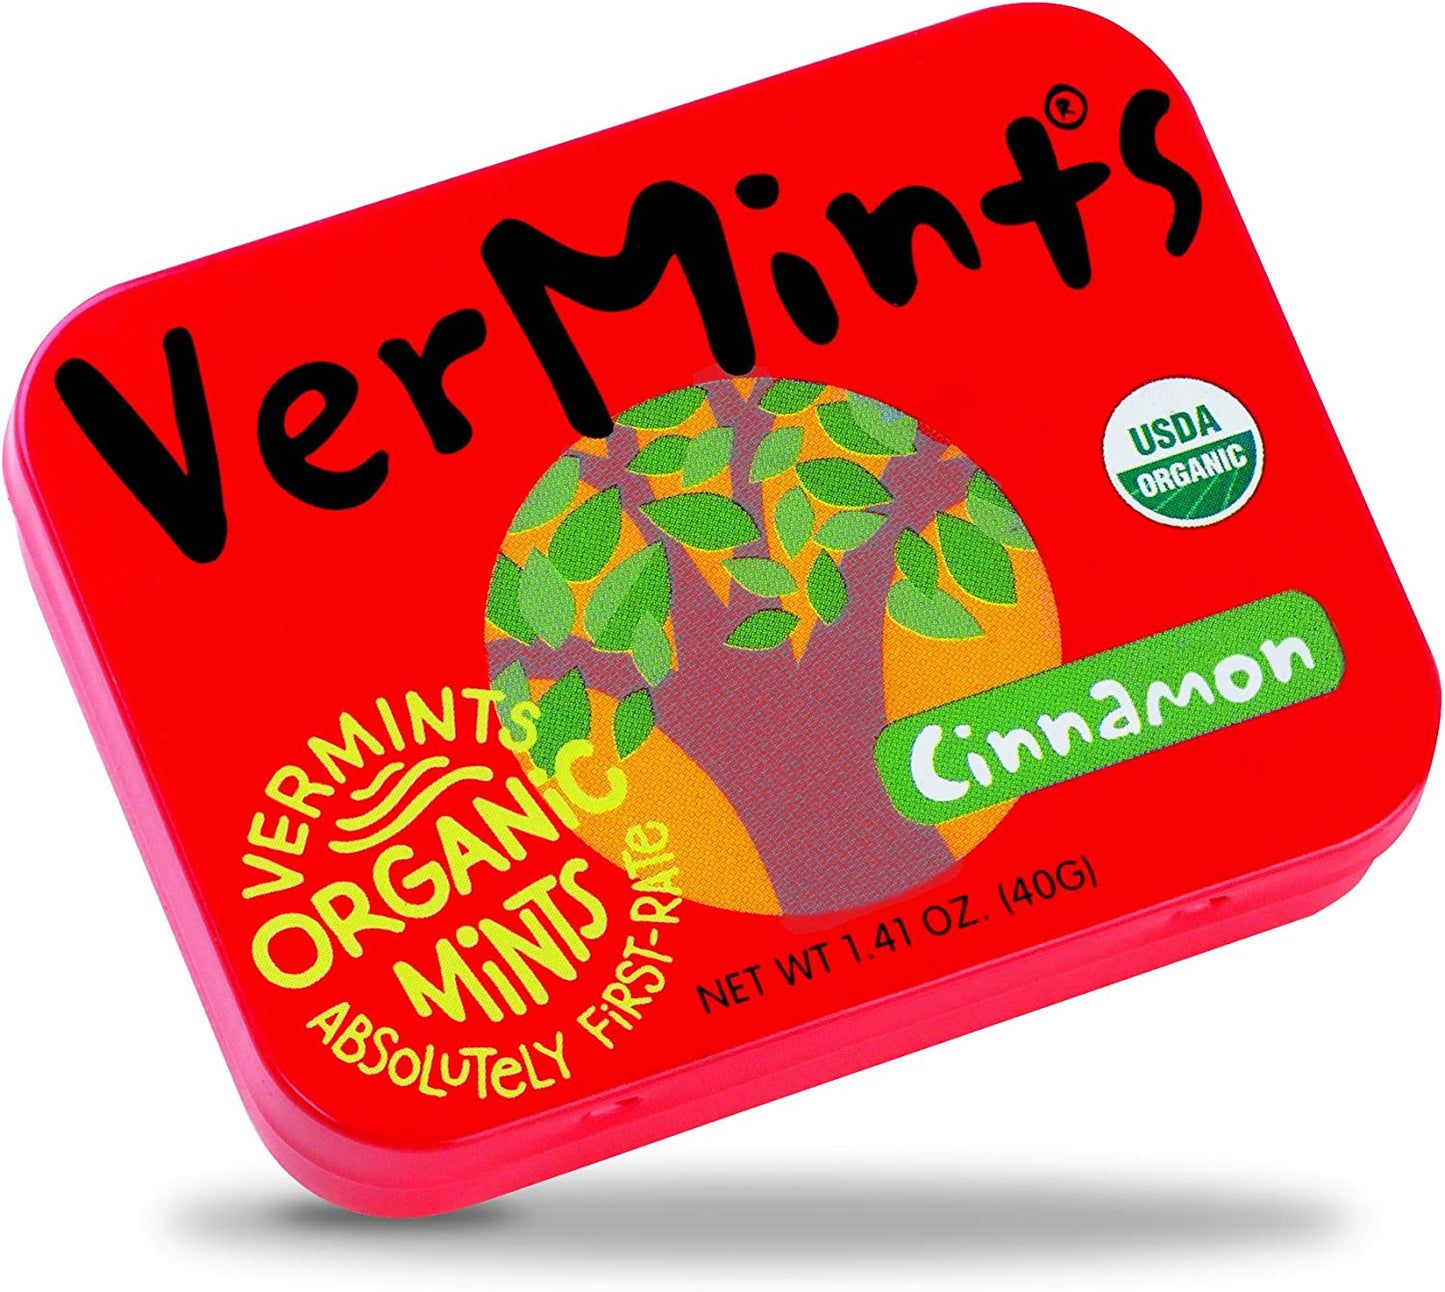 VerMints Organic Mints - Cinnamon 40g - Pack of 6